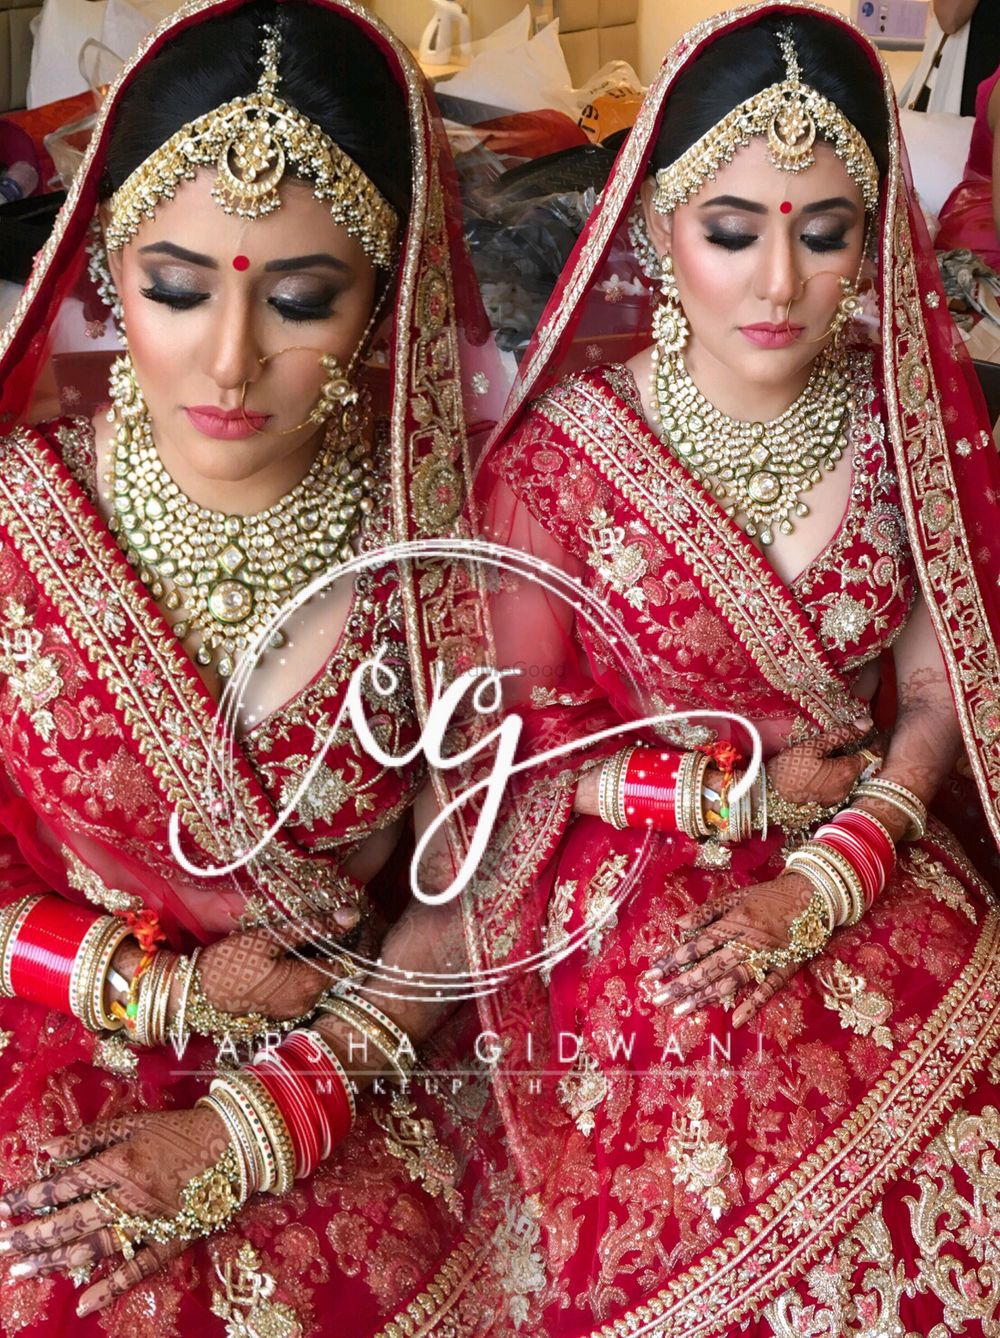 Photo From Brides - By Varsha Gidwani